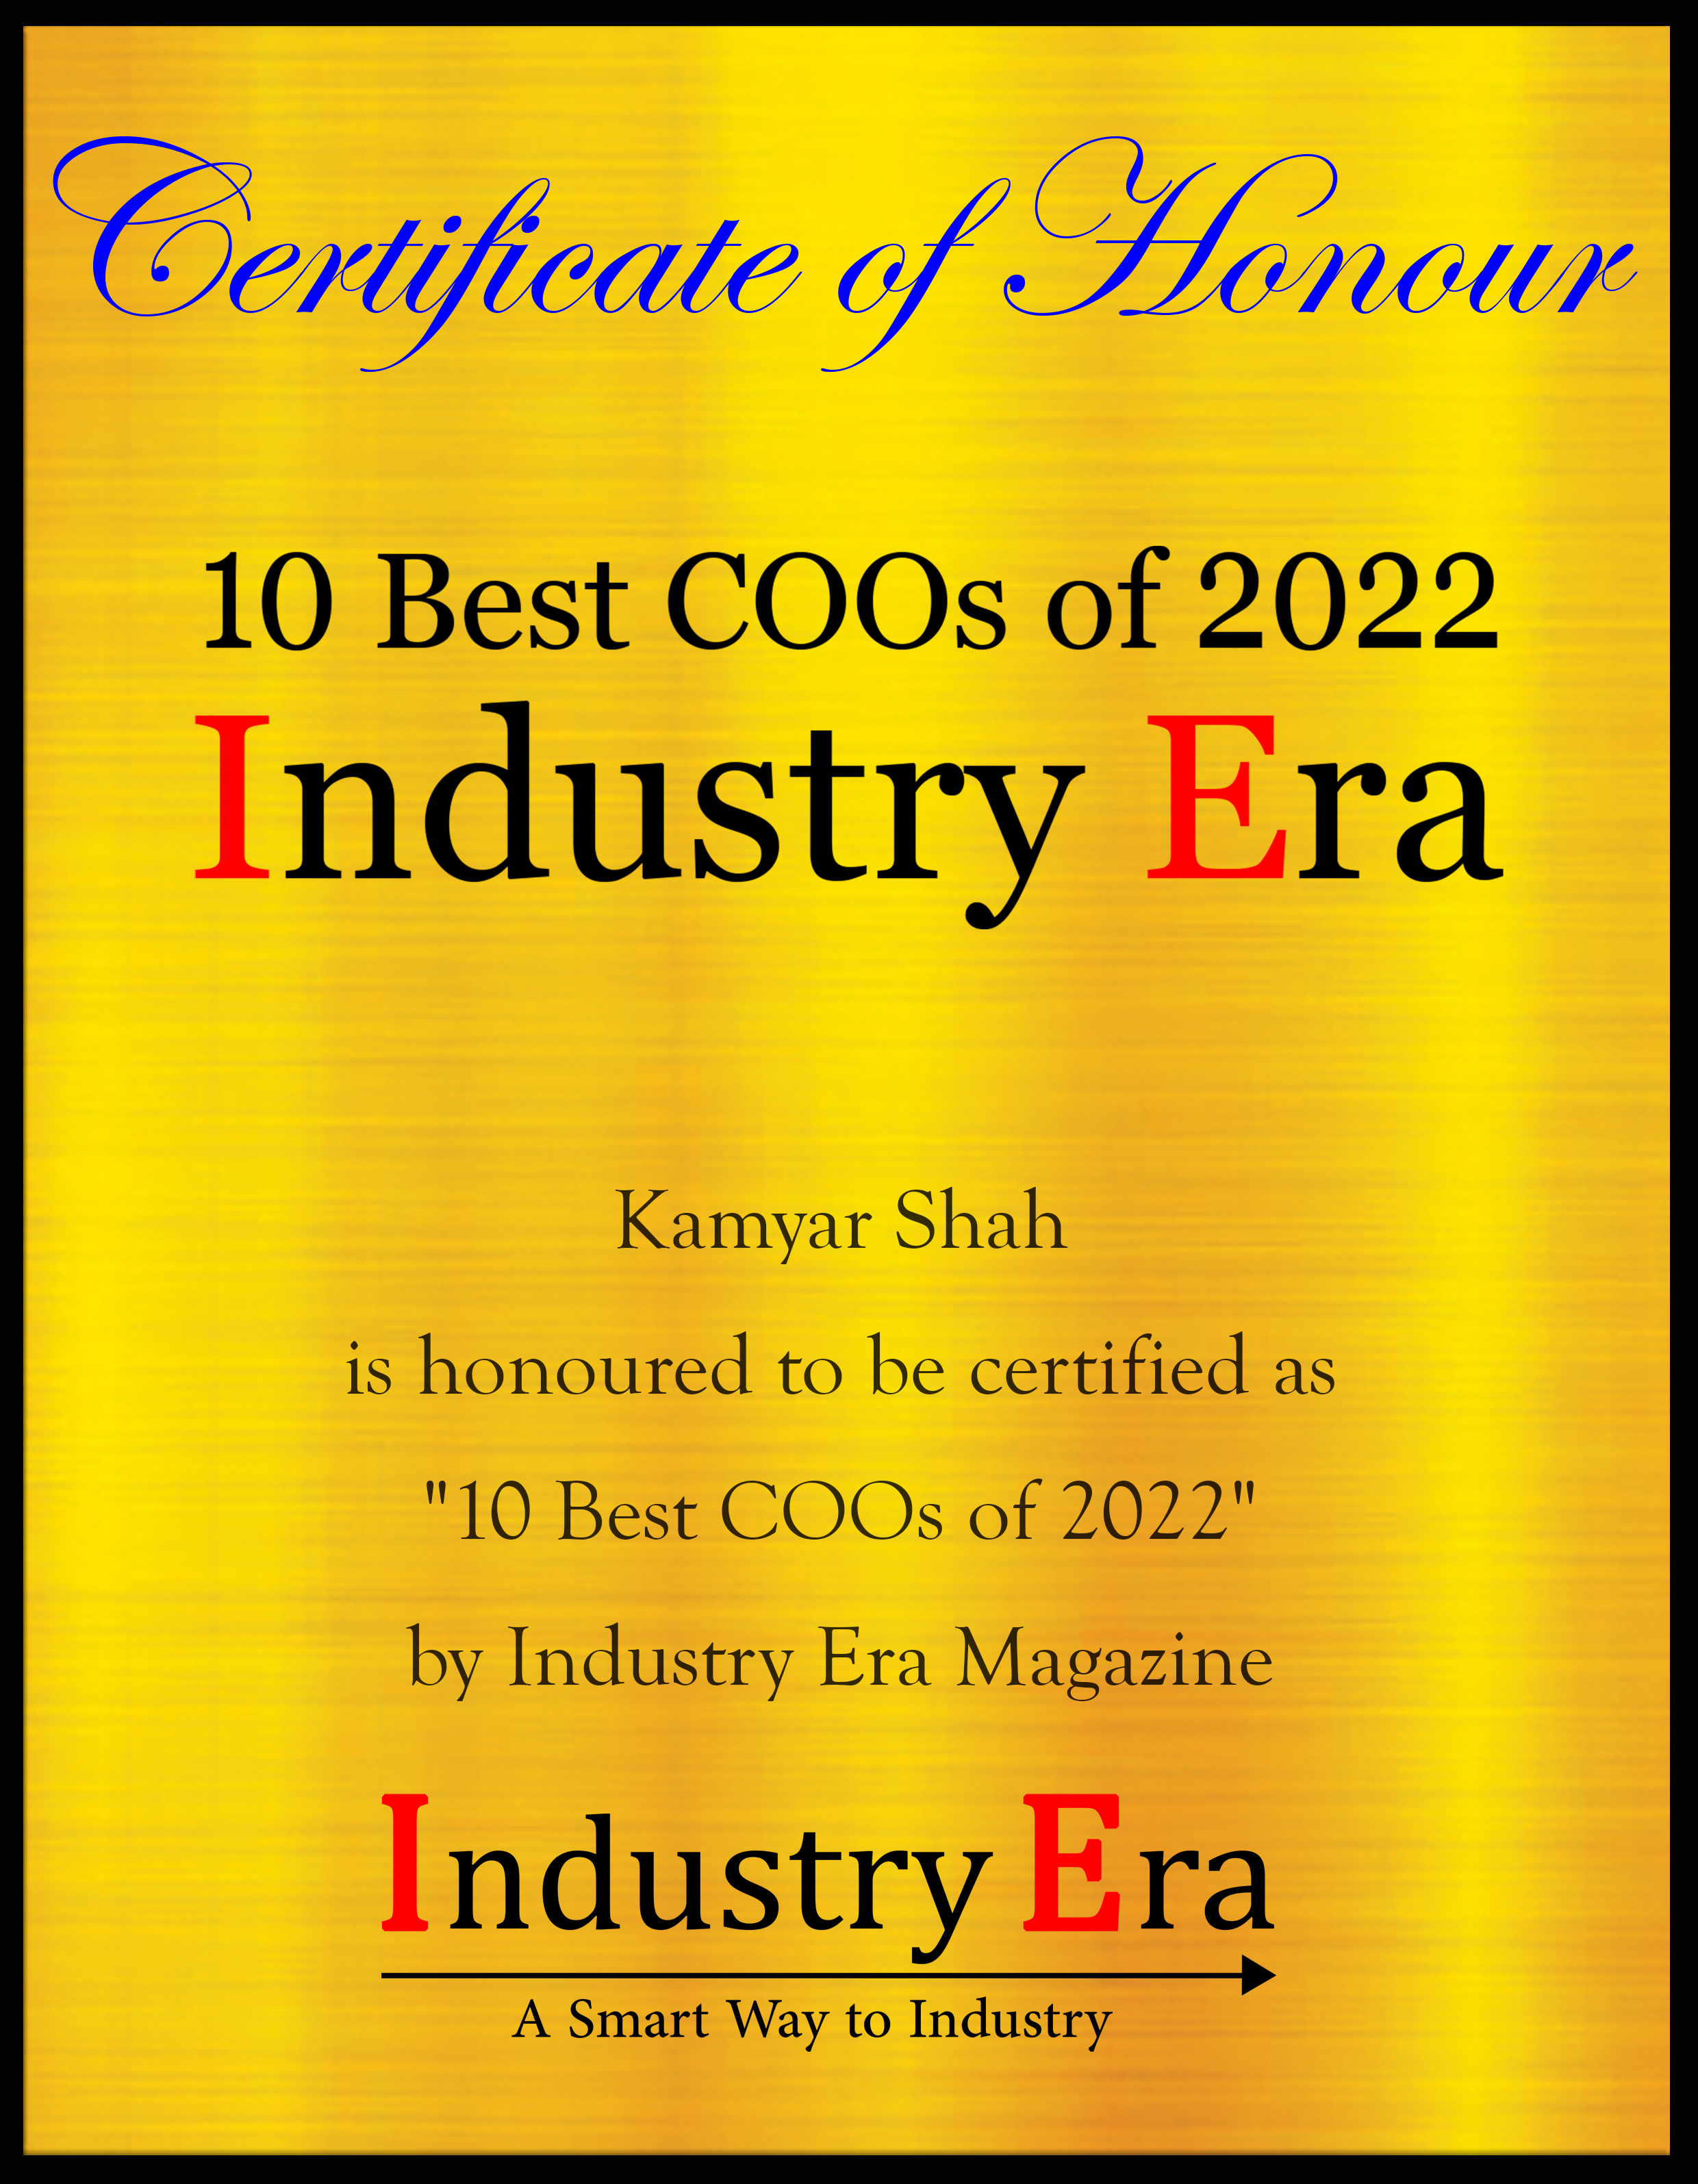 Kamyar Shah, COO Certificate